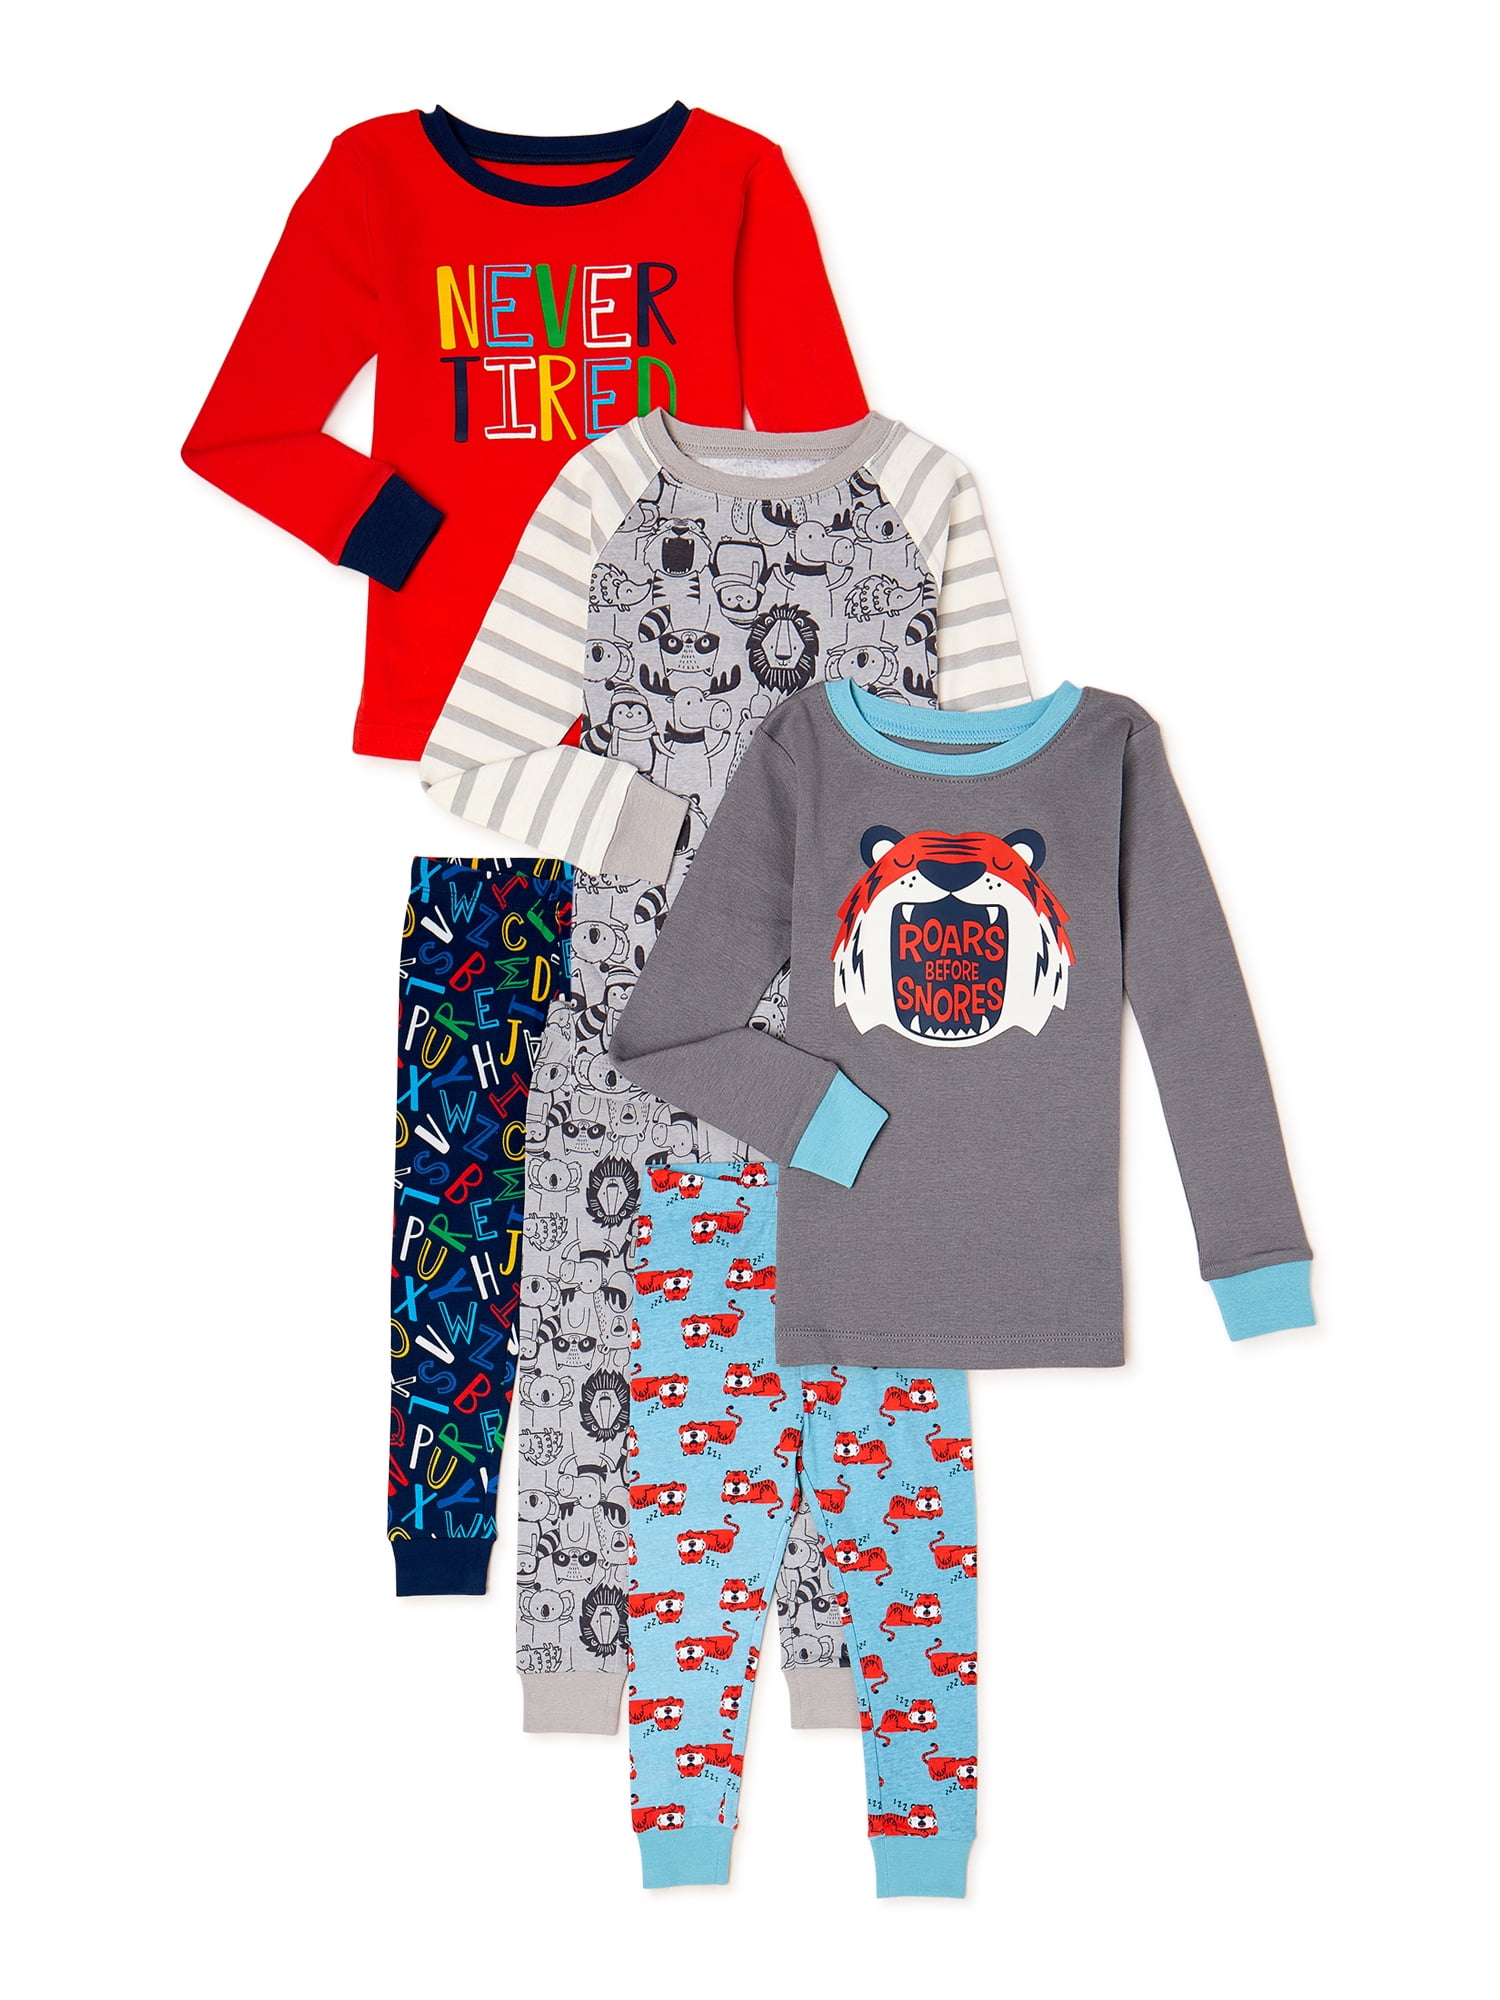 12M-7T Kids Unisex Girls & Boys Thermal Underwear Toddler Snug-Fit Pajamas Set Winter Long Sleeve Warm Jammies